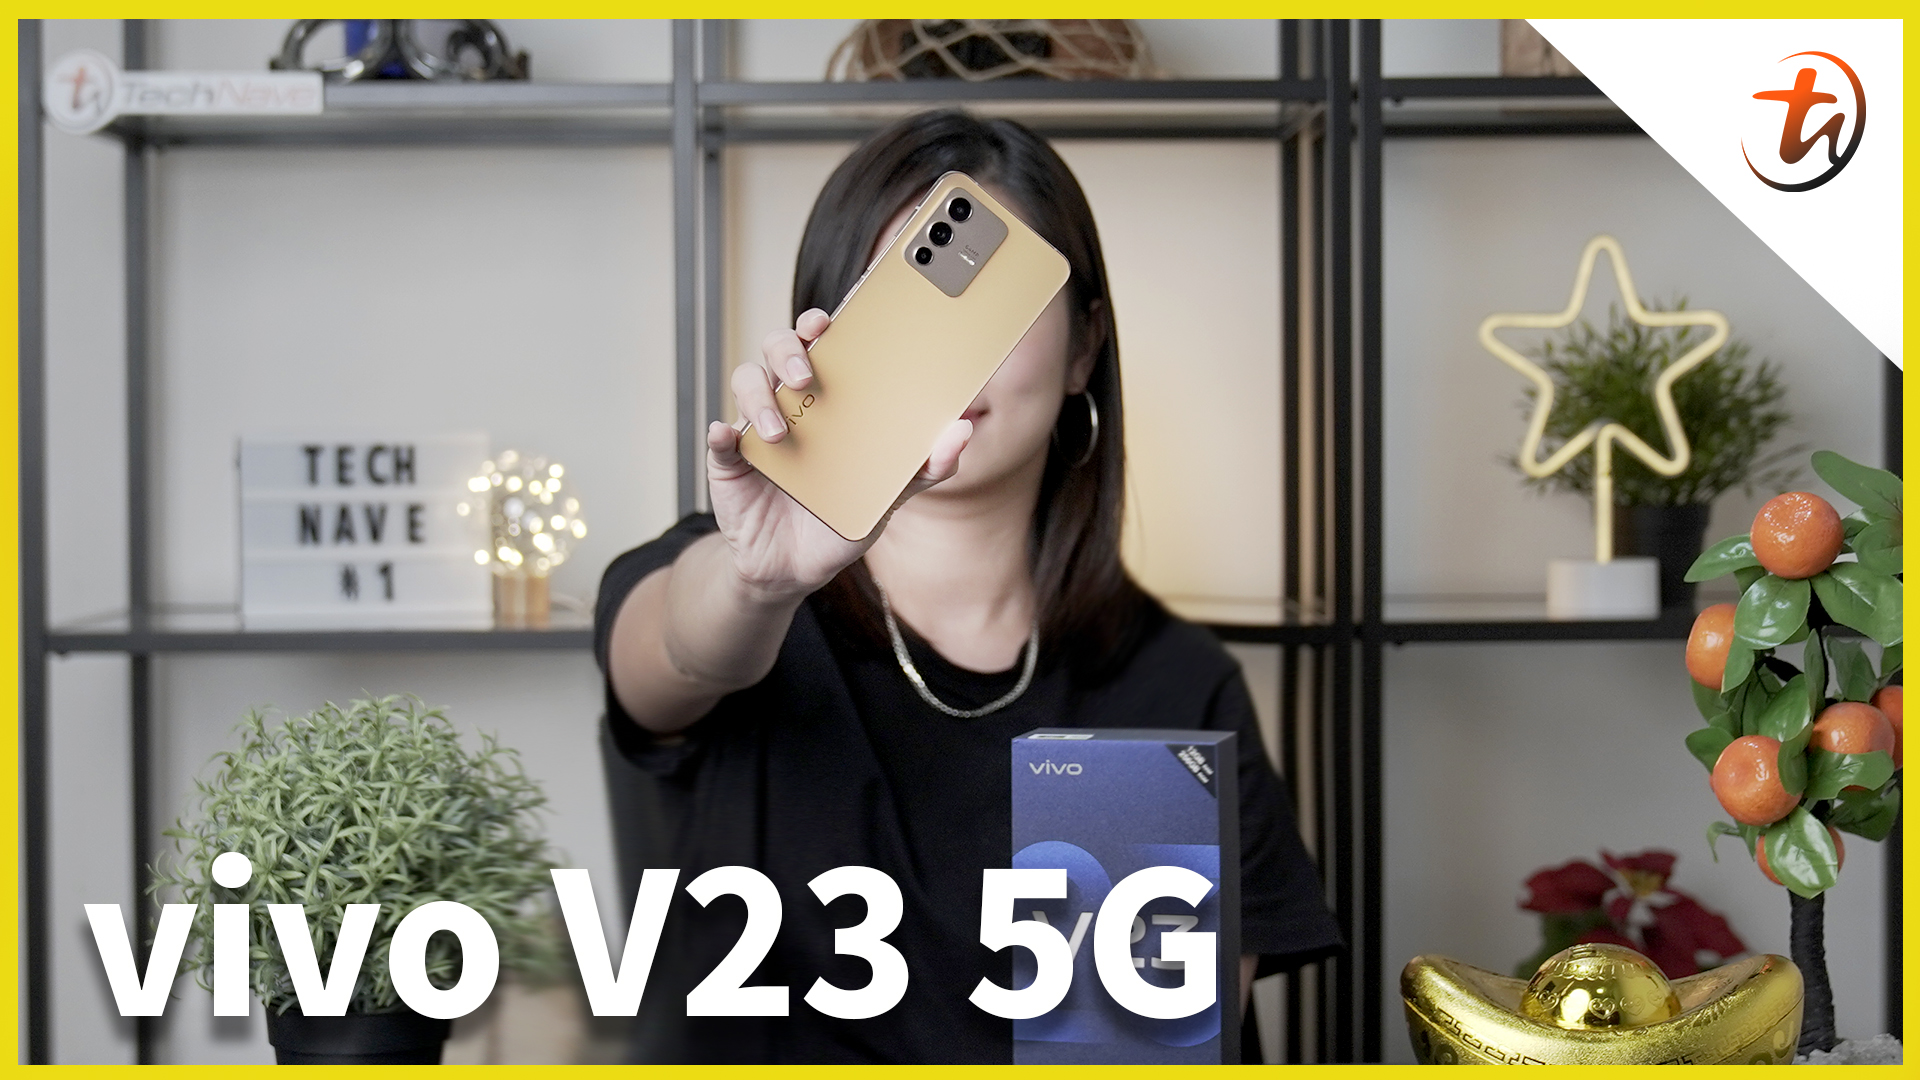 vivo V23 5G - Superb dual selfie snapper | TechNave Unboxing and Hands-On Video